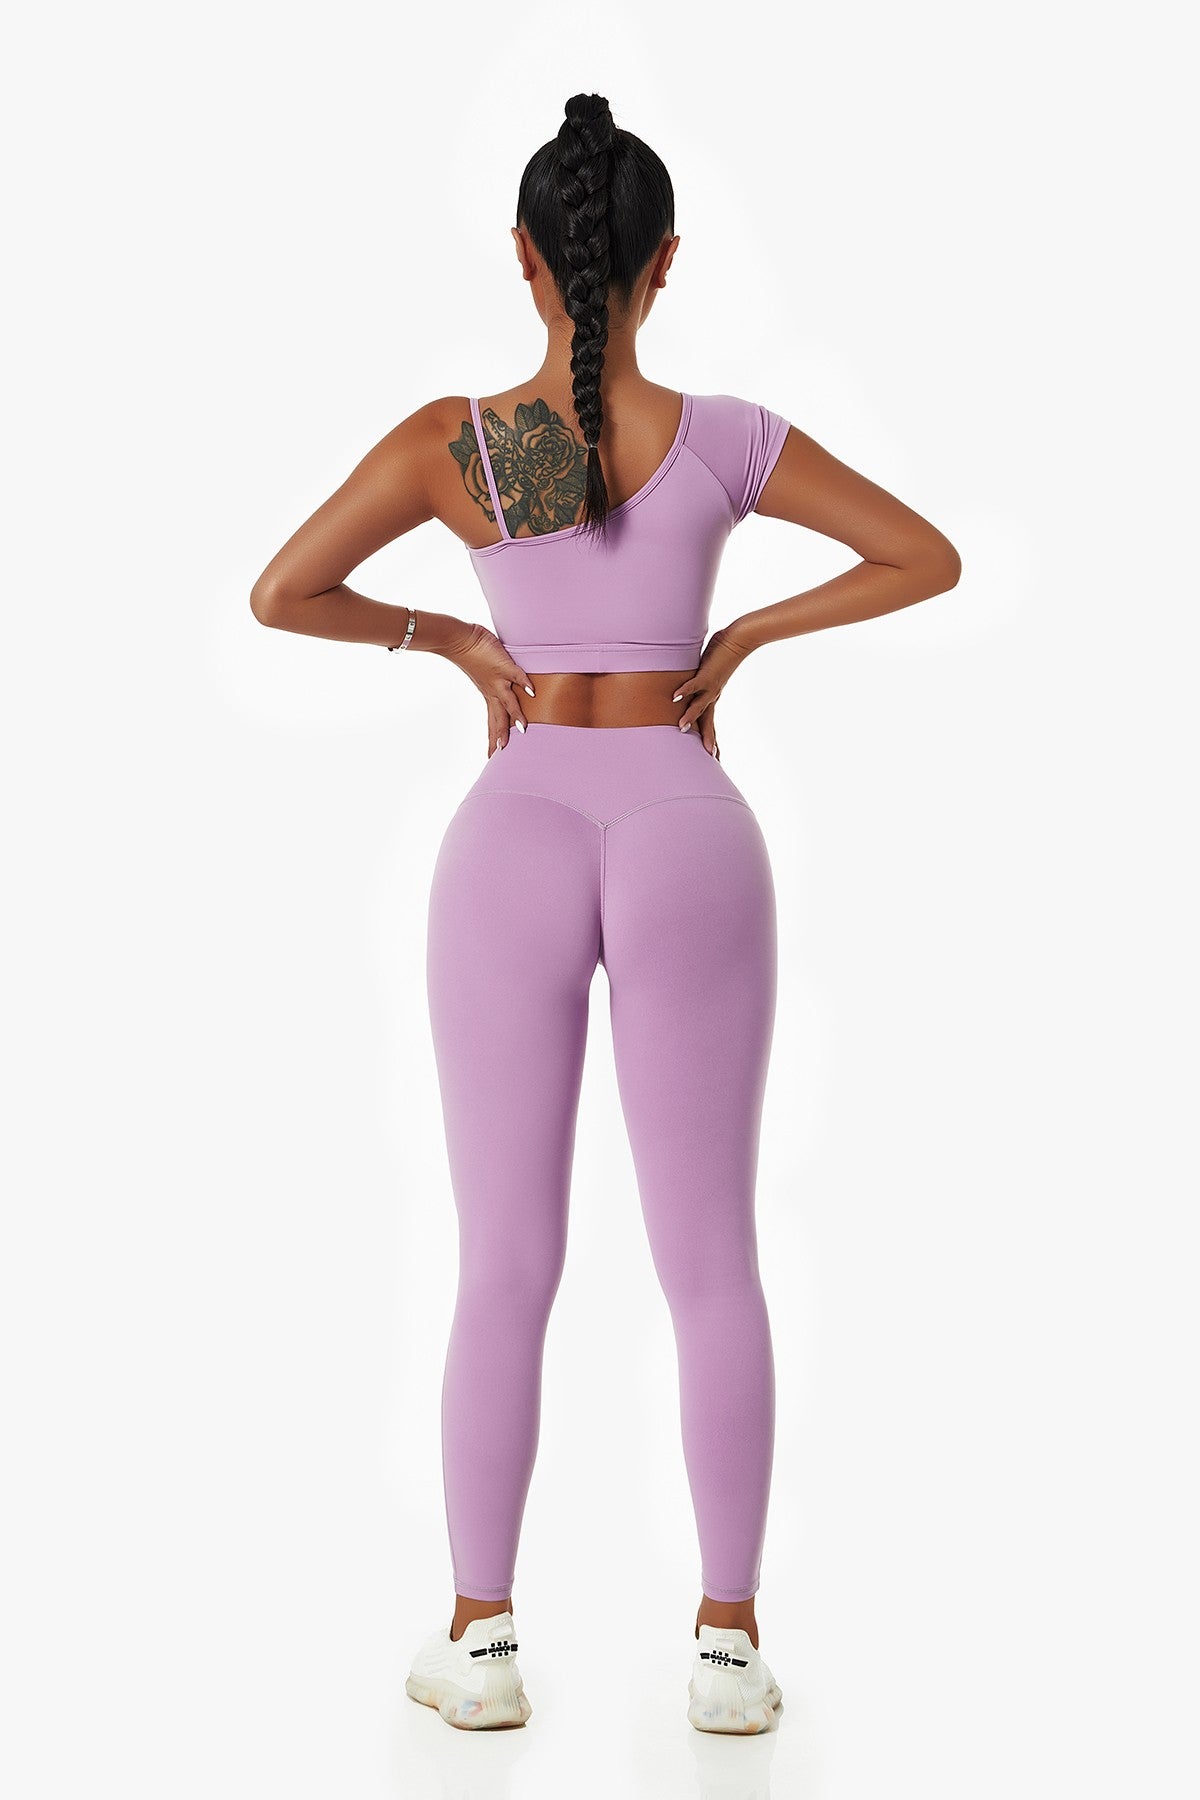 MRULIC yoga pants Women V Waist Butt Lifting Leggings With Pockets High  Waisted Yoga Pants yoga pants women Purple + S 